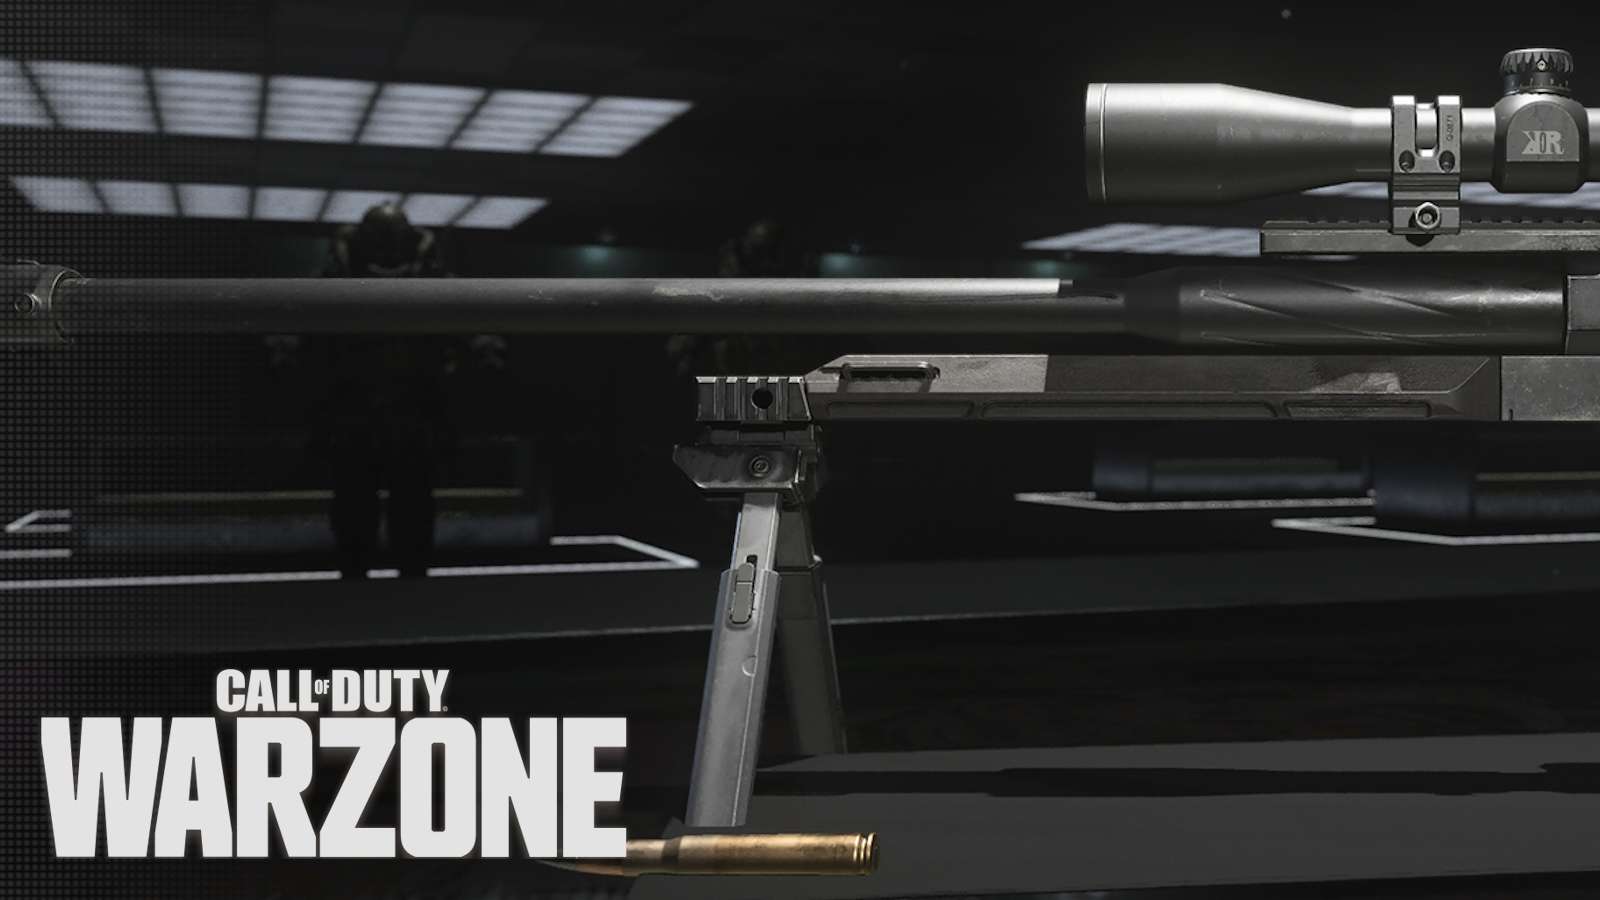 KATT-AMR sniper with Warzone logo.